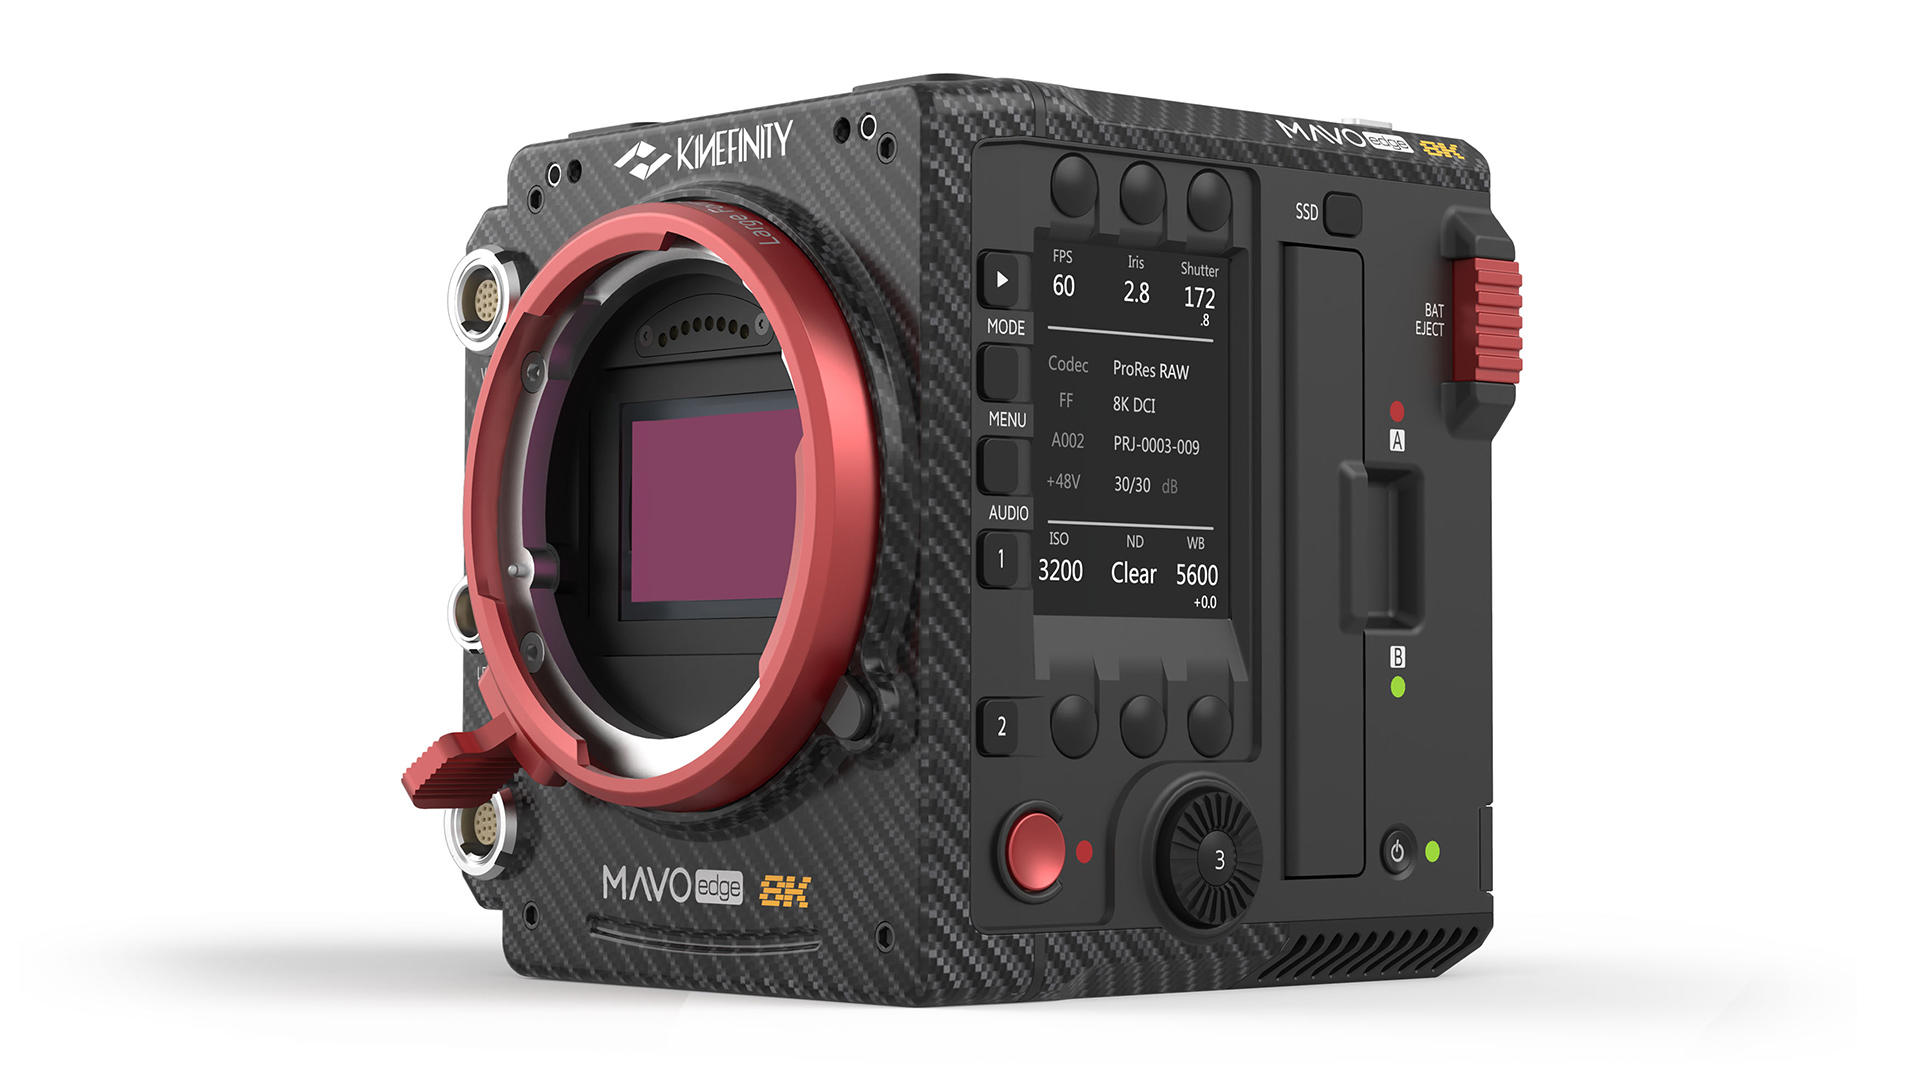 Anunciaron la nueva cámara MAVO Edge de Kinefinity - 8K 75 fps por menos de $12.000